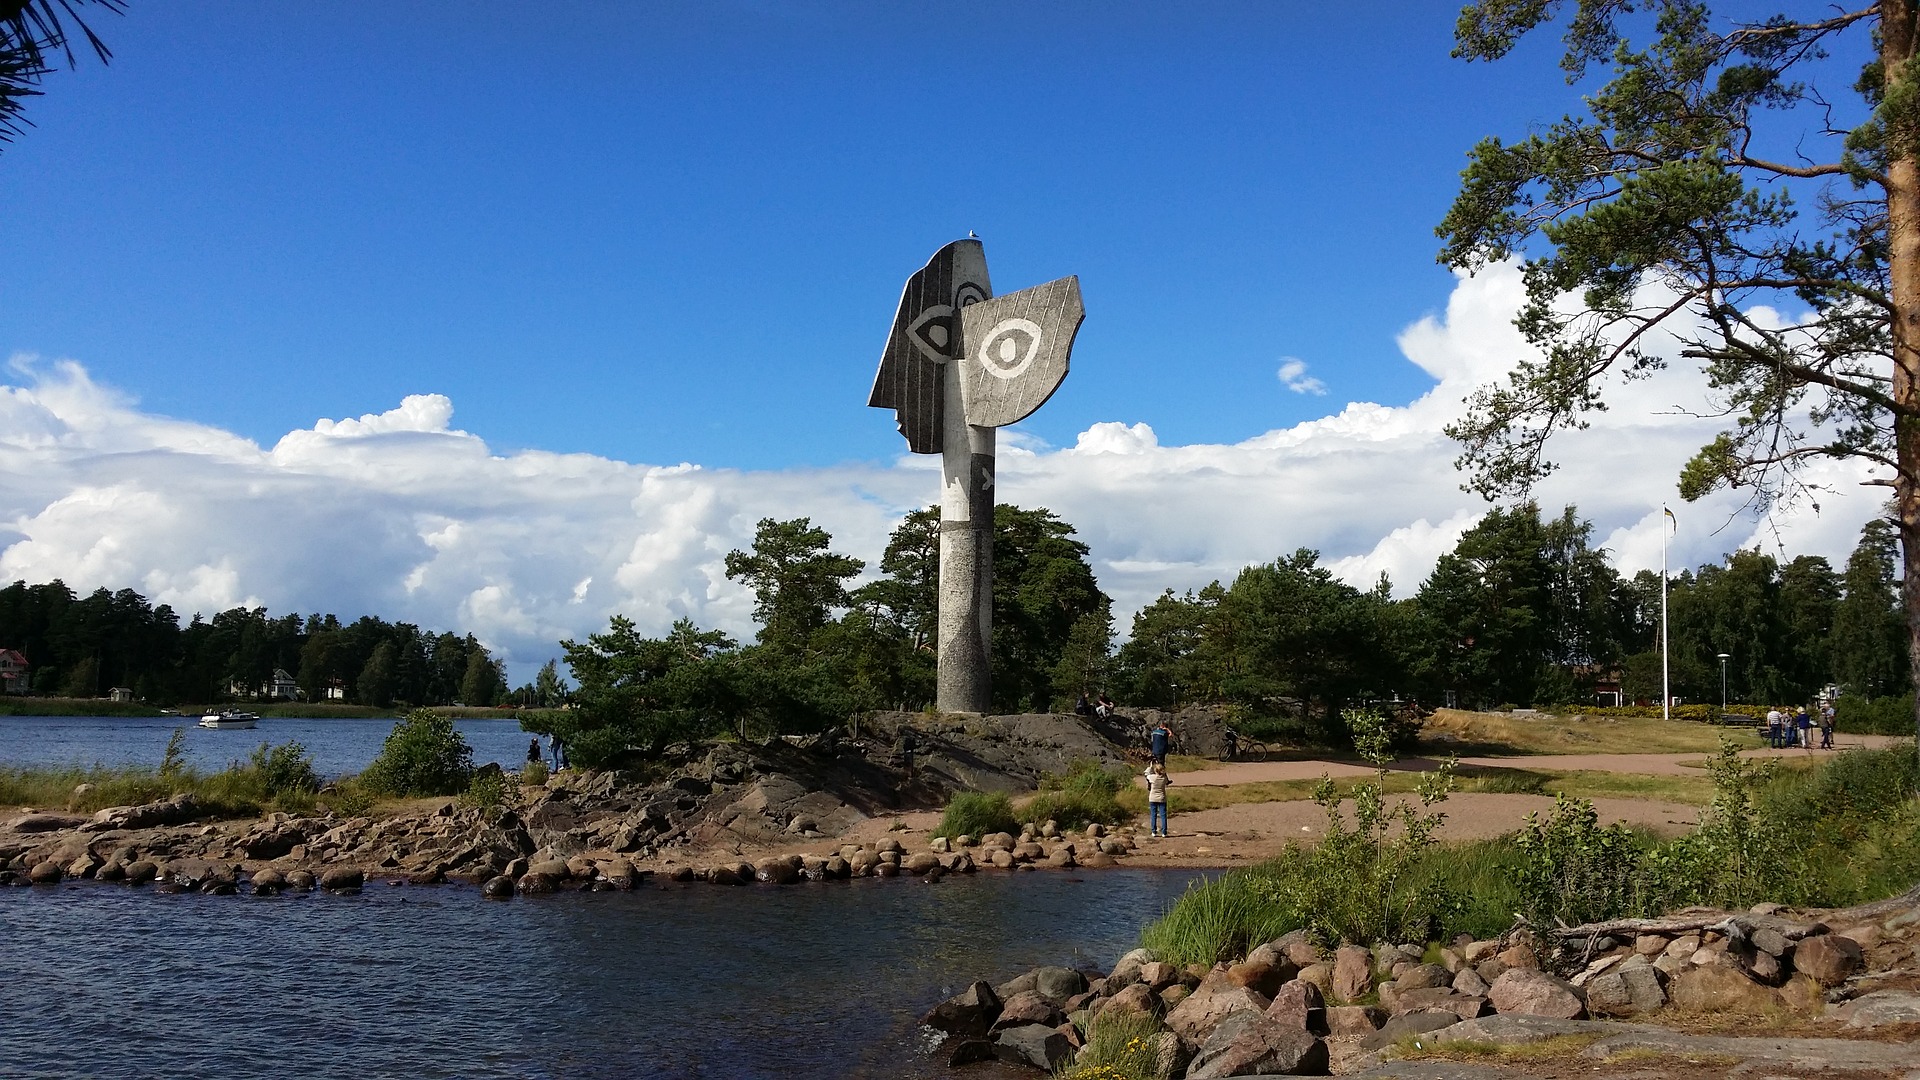 Picasso Skulptur in Kristinehamn, Schweden Foto: Catta Kvarn via pixabay.de